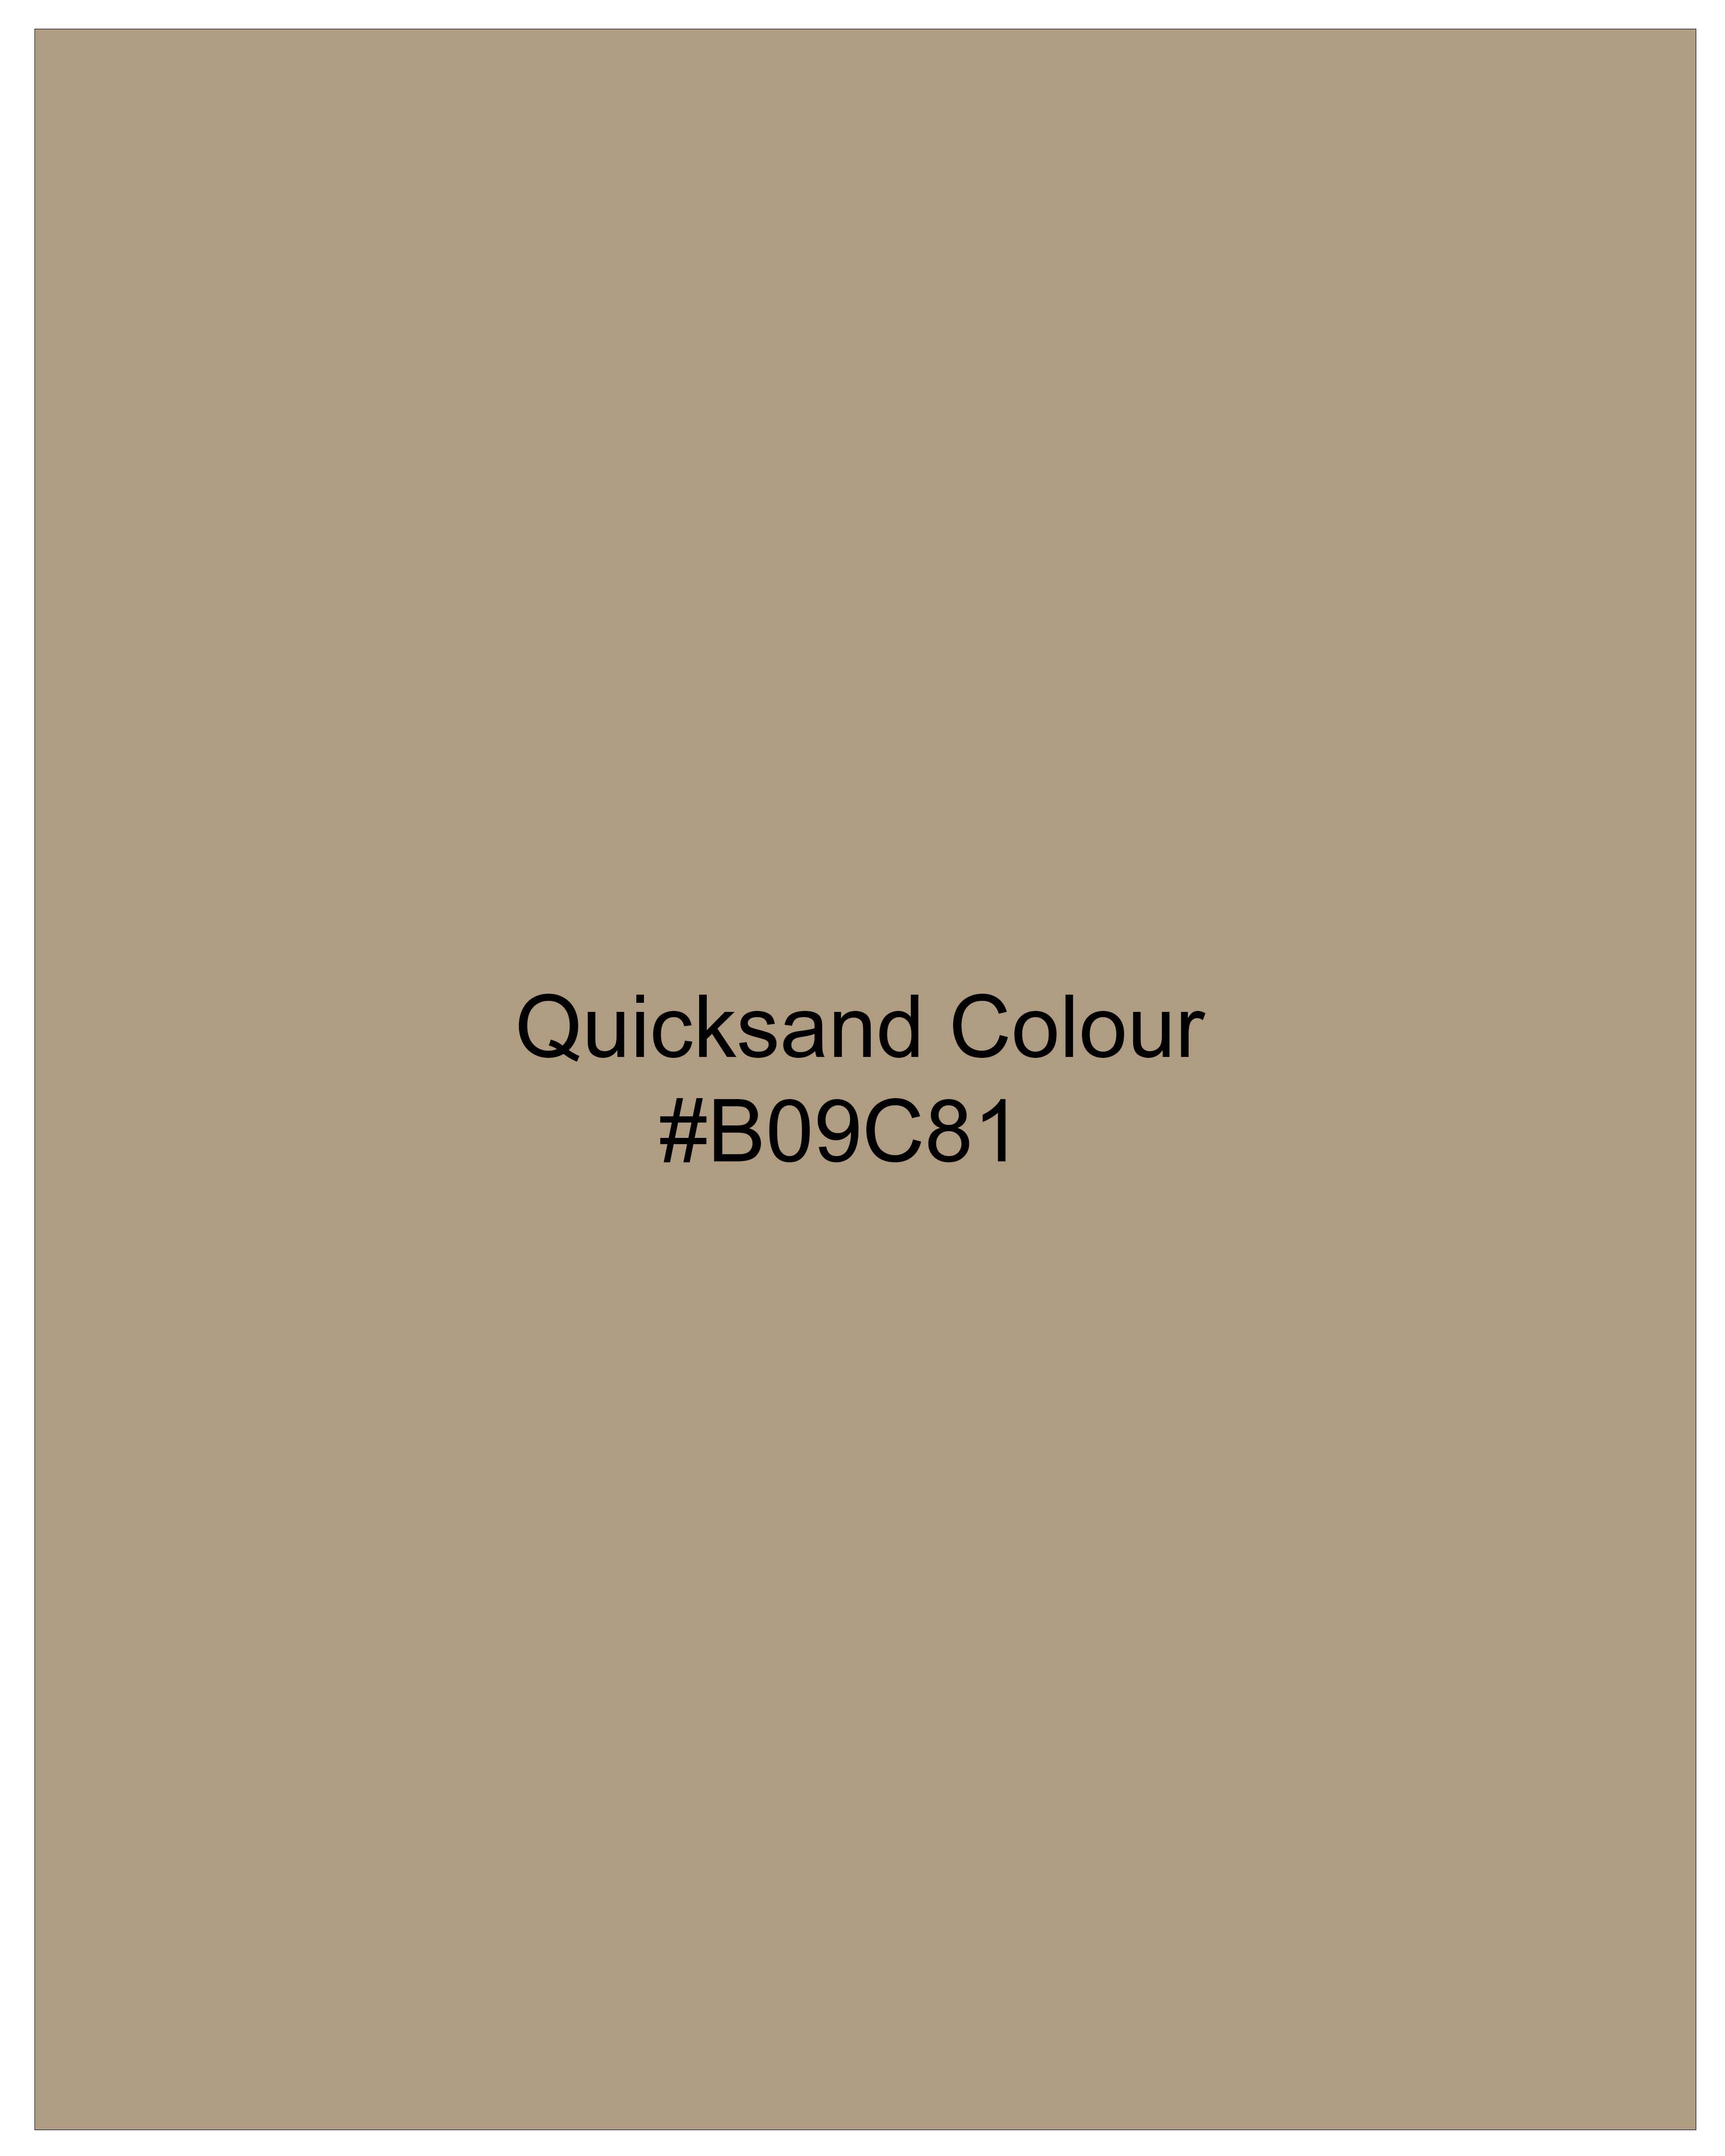 Quicksand Brown Premium Cotton Stretchable Nehru Jacket WC2654-36, WC2654-38, WC2654-40, WC2654-42, WC2654-44, WC2654-46, WC2654-48, WC2654-50, WC2654-52, WC2654-54, WC2654-56, WC2654-58, WC2654-60